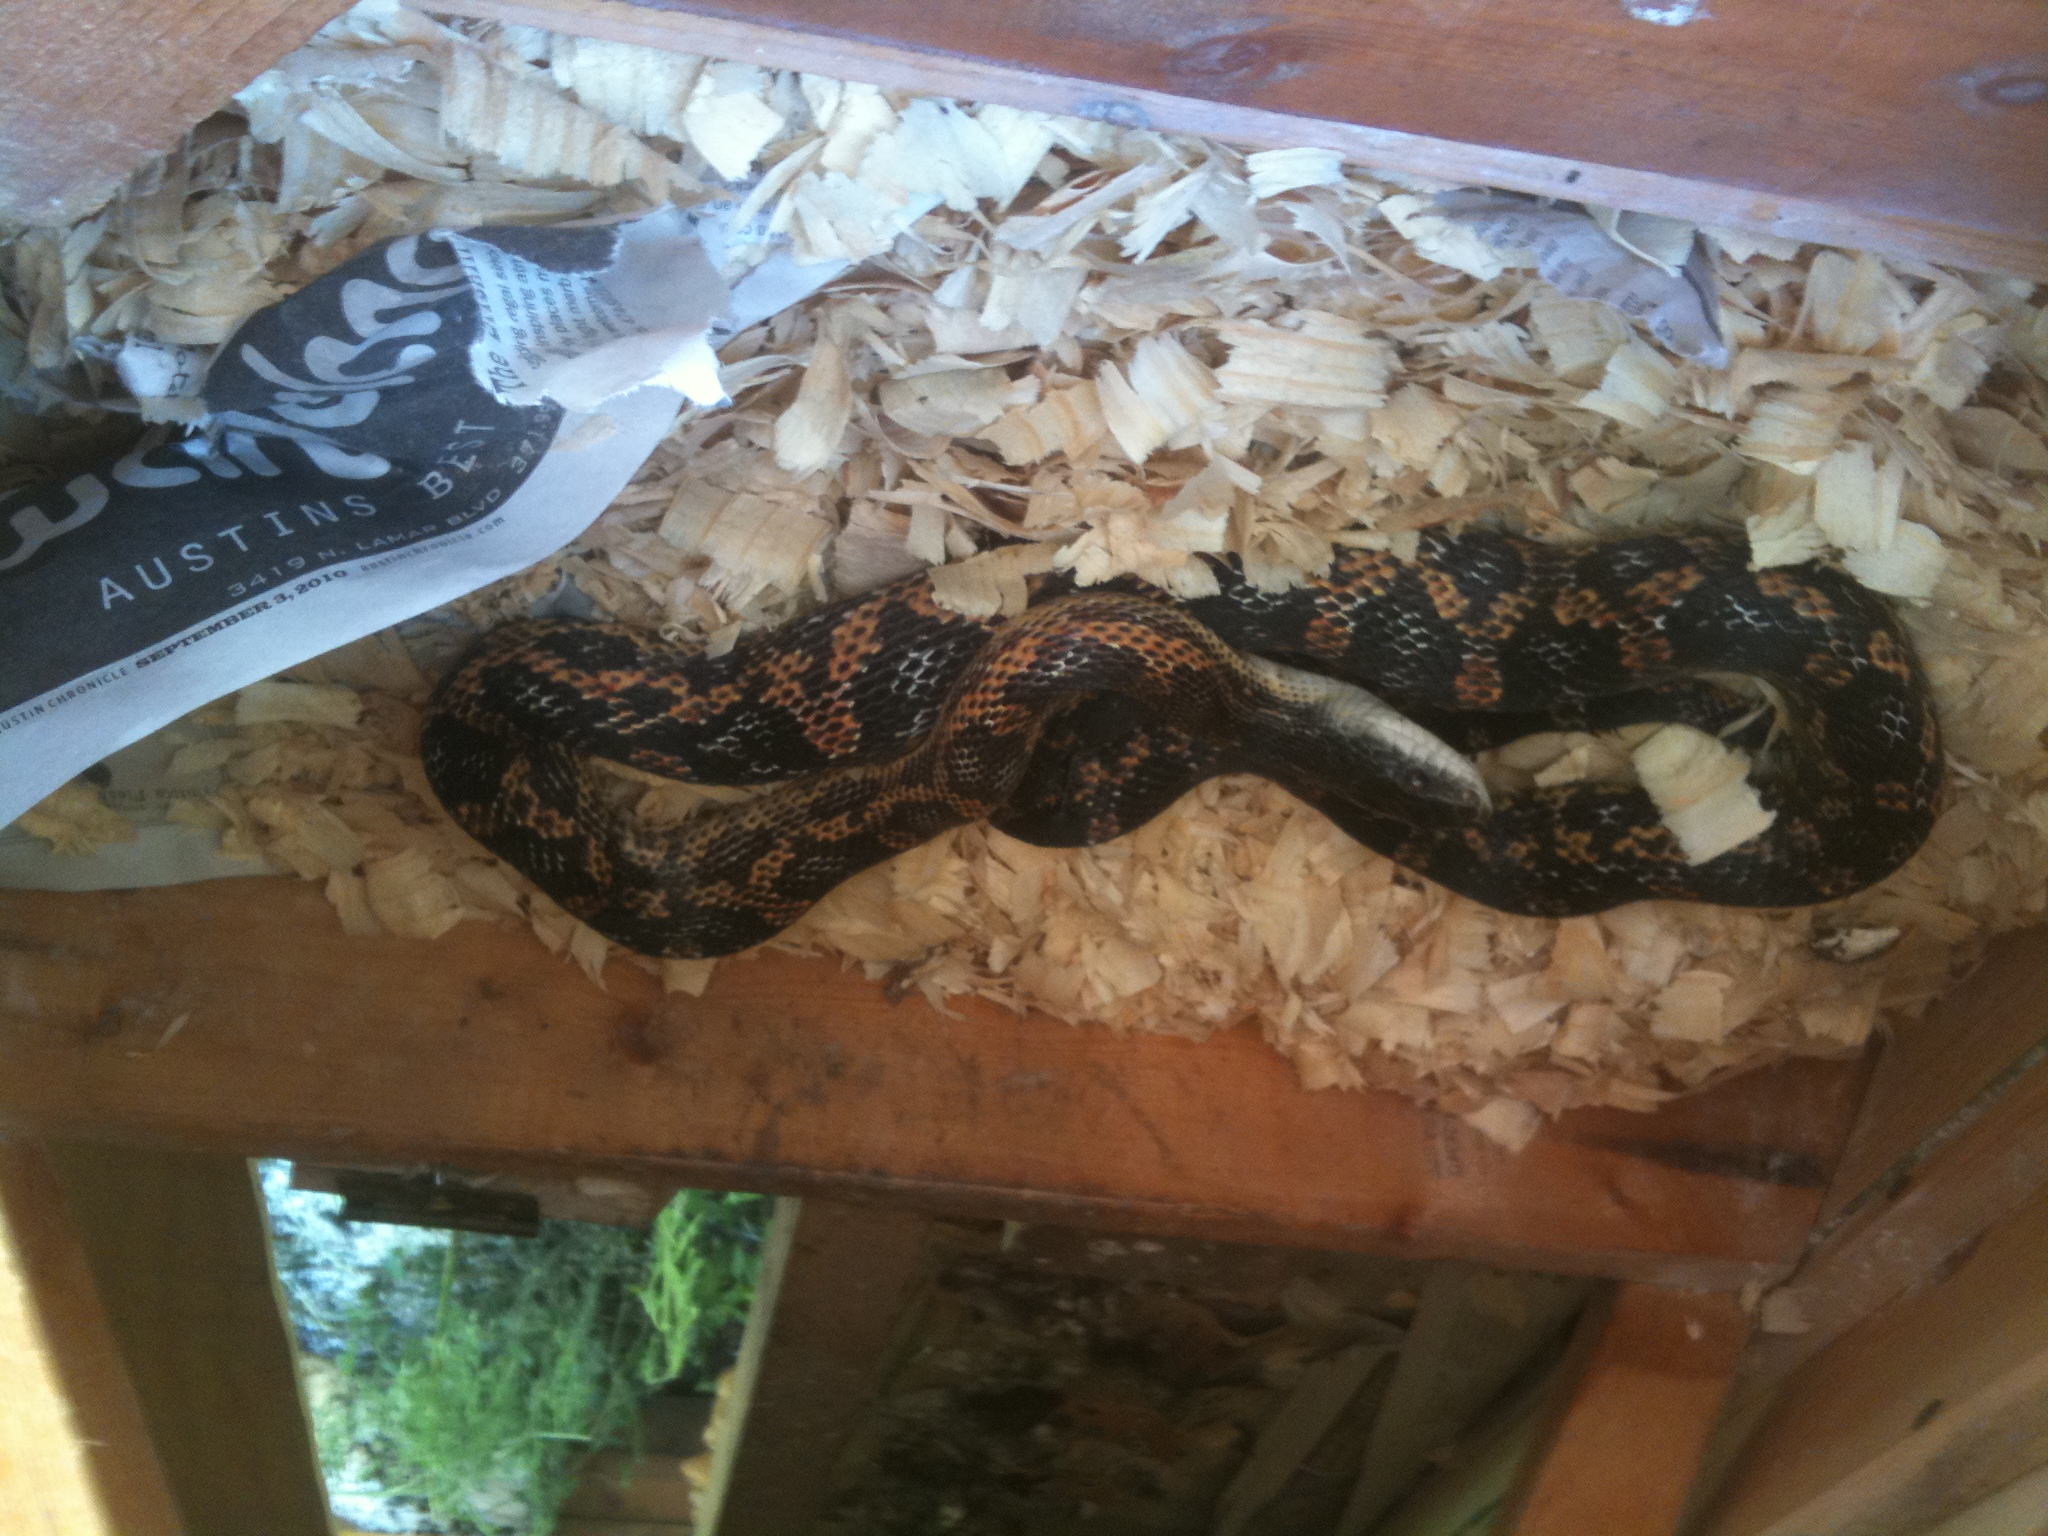 Our snake visitor, enjoying an egg supper.